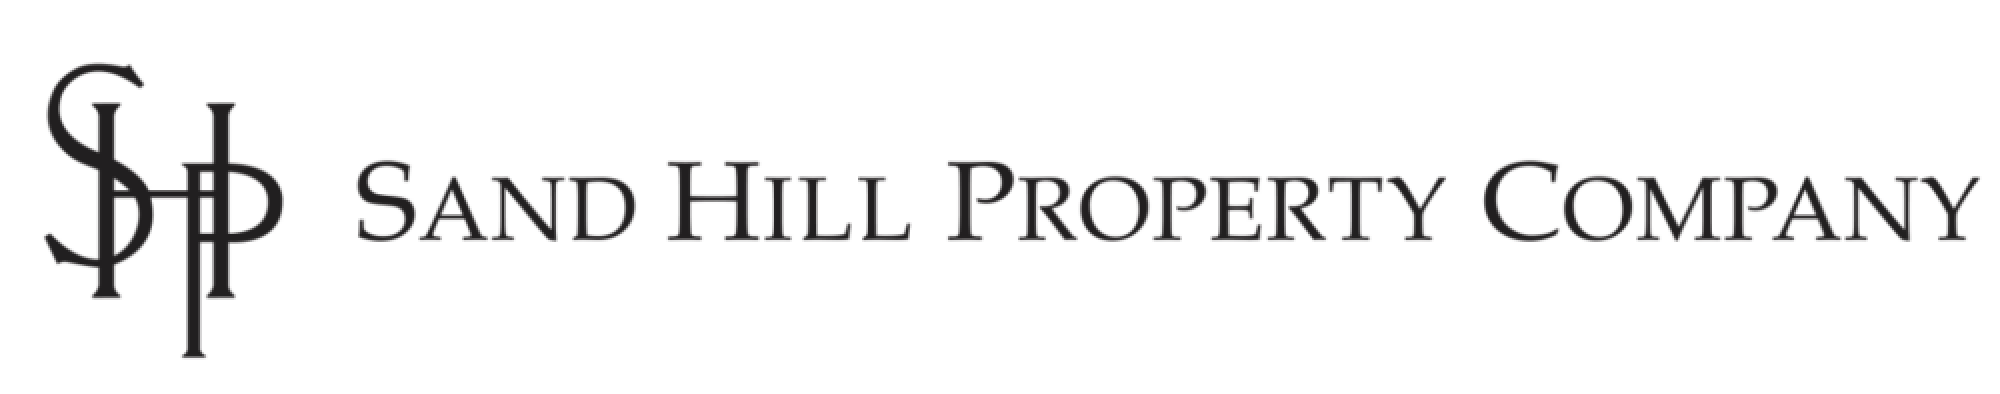 Sand Hill Property Company